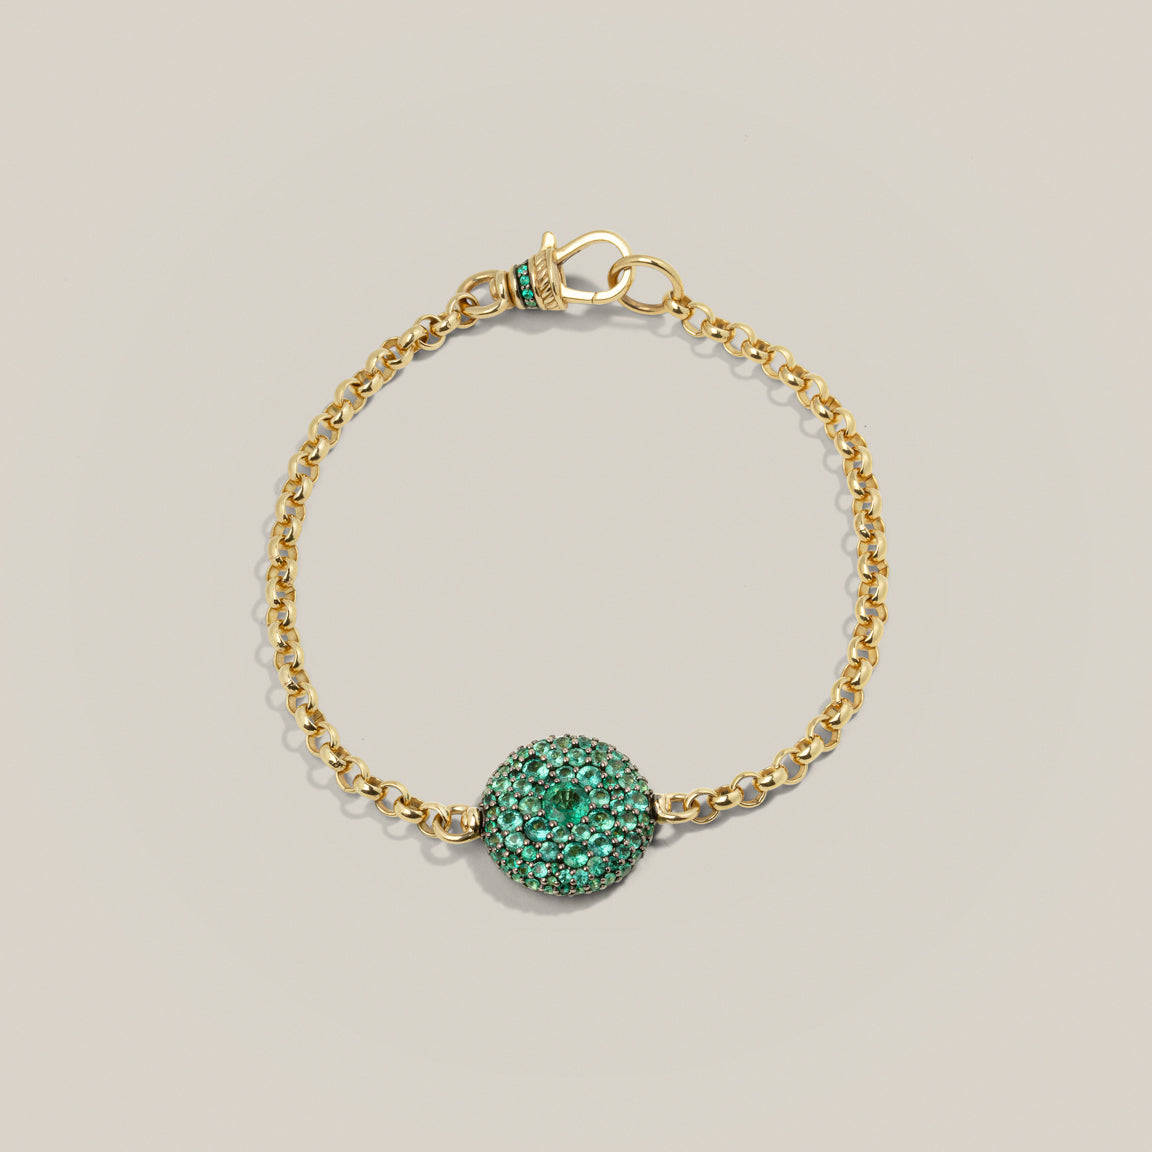 Pocket Watch Bracelet - Emerald